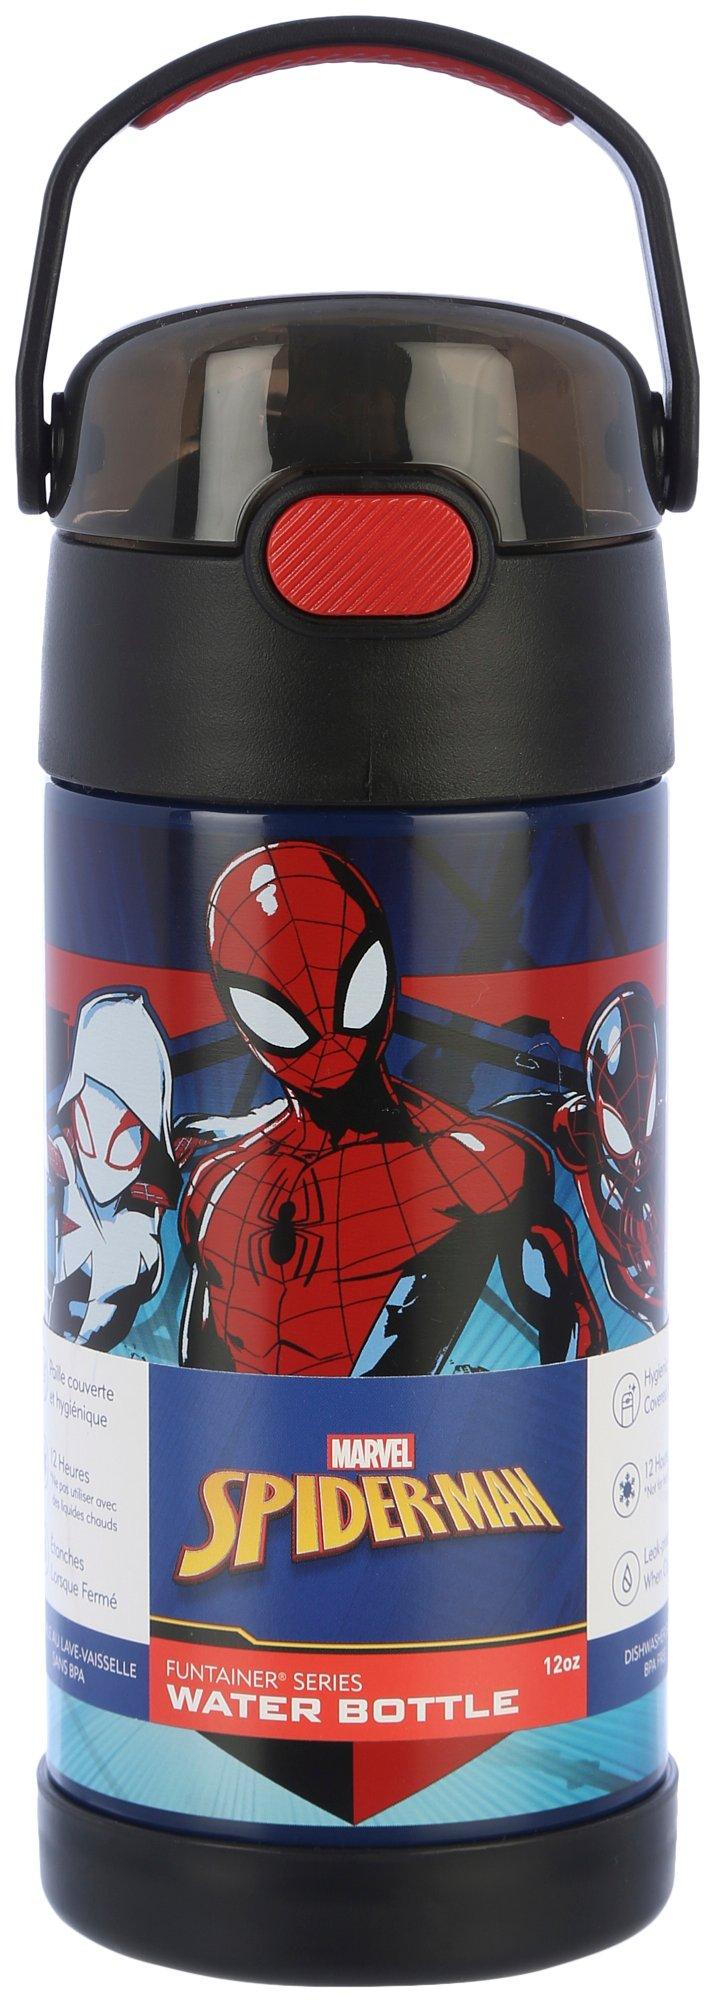 https://images.beallsflorida.com/i/beallsflorida/658-8177-4388-41-yyy/*12oz-Stainless-Steel-Spiderman-Bottle-For-Kids*?$product$&fmt=auto&qlt=default